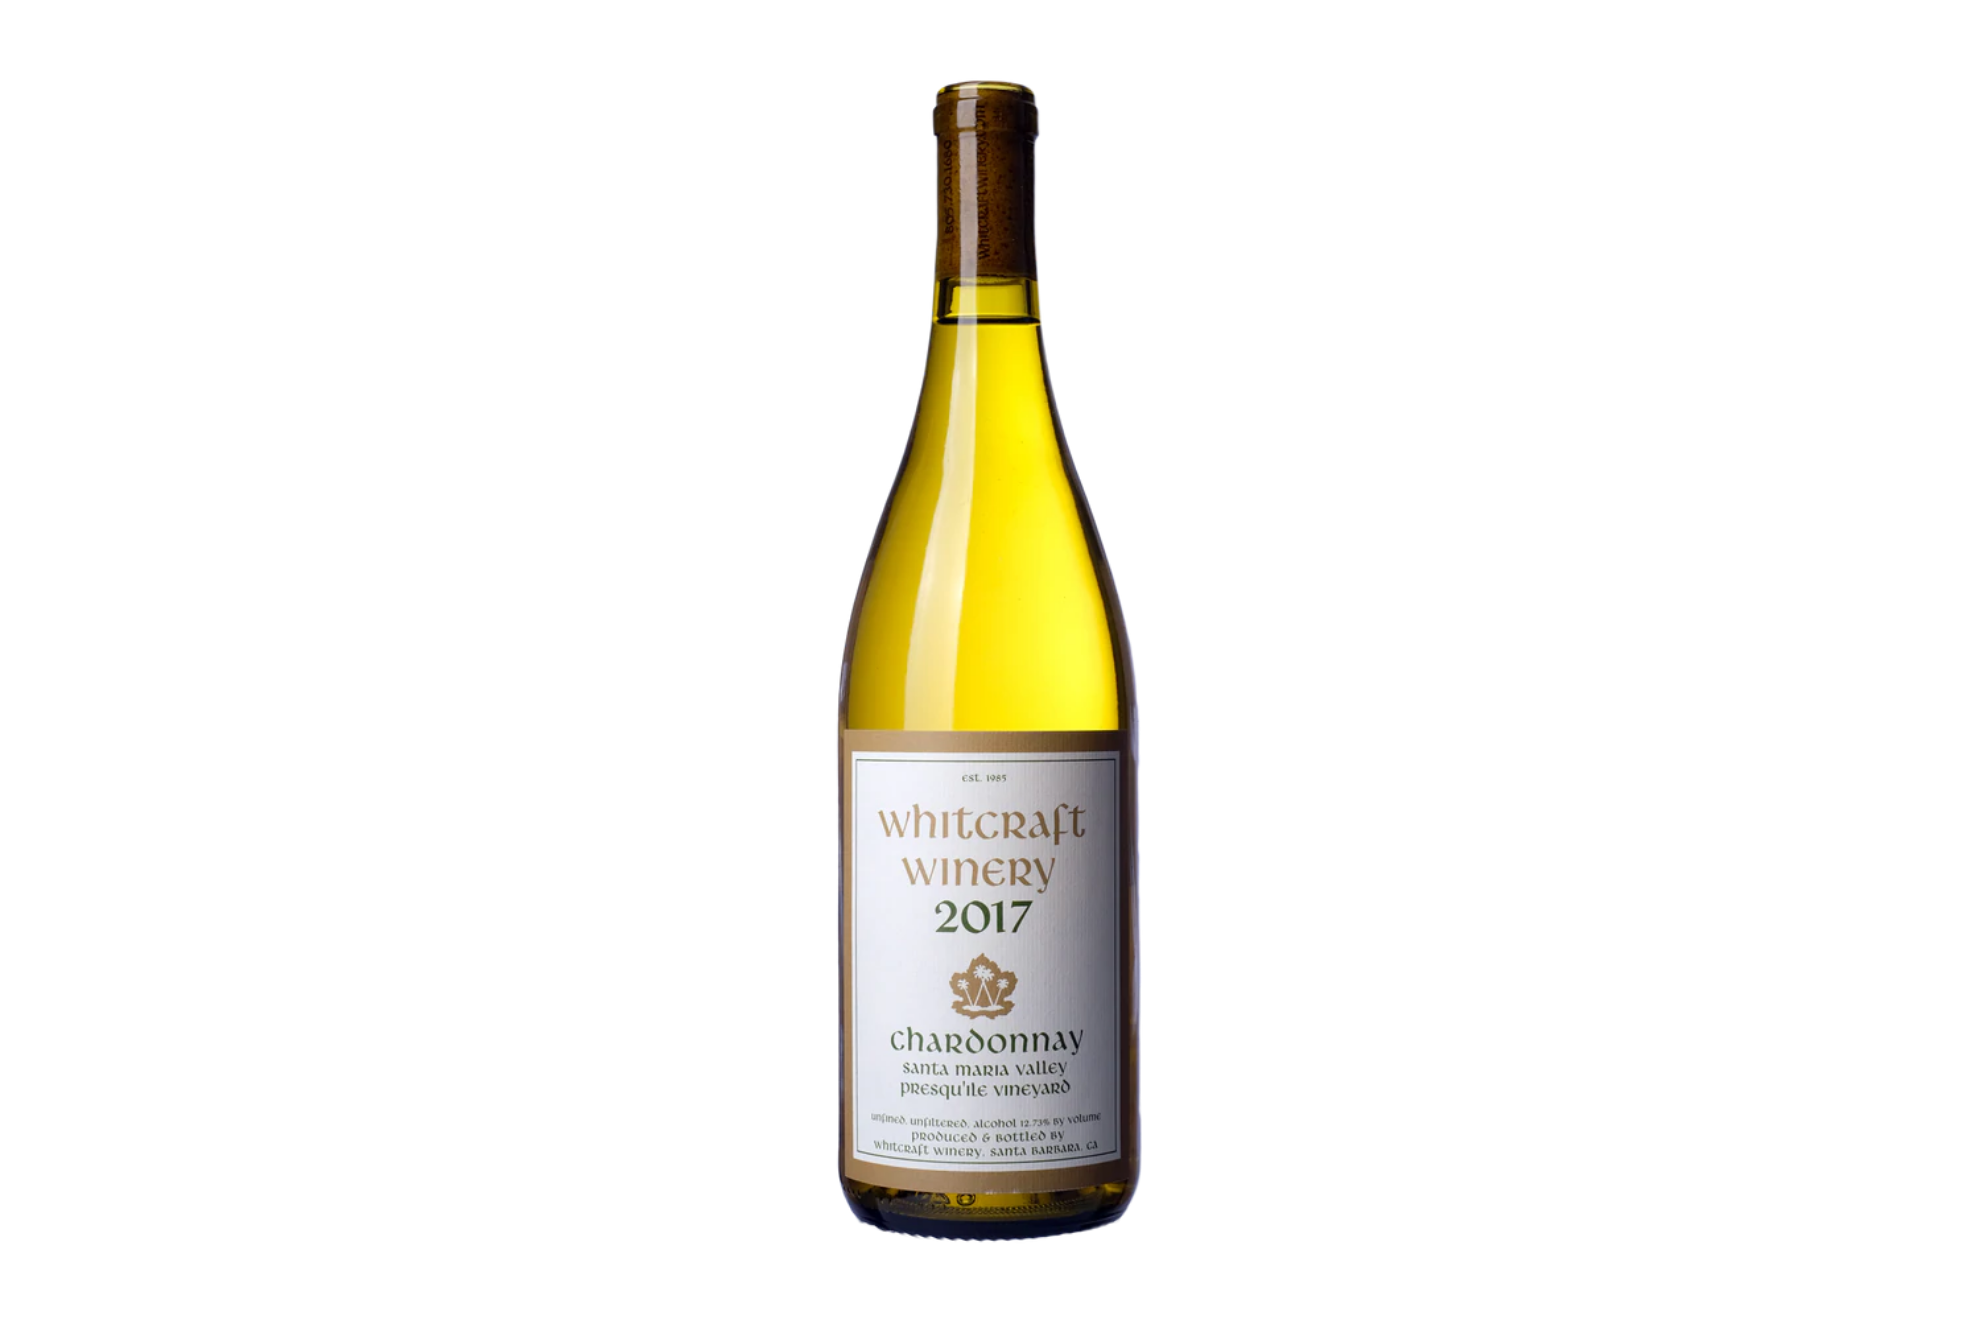 Whitcraft La Rinconada Vineyard Chardonnay 2018